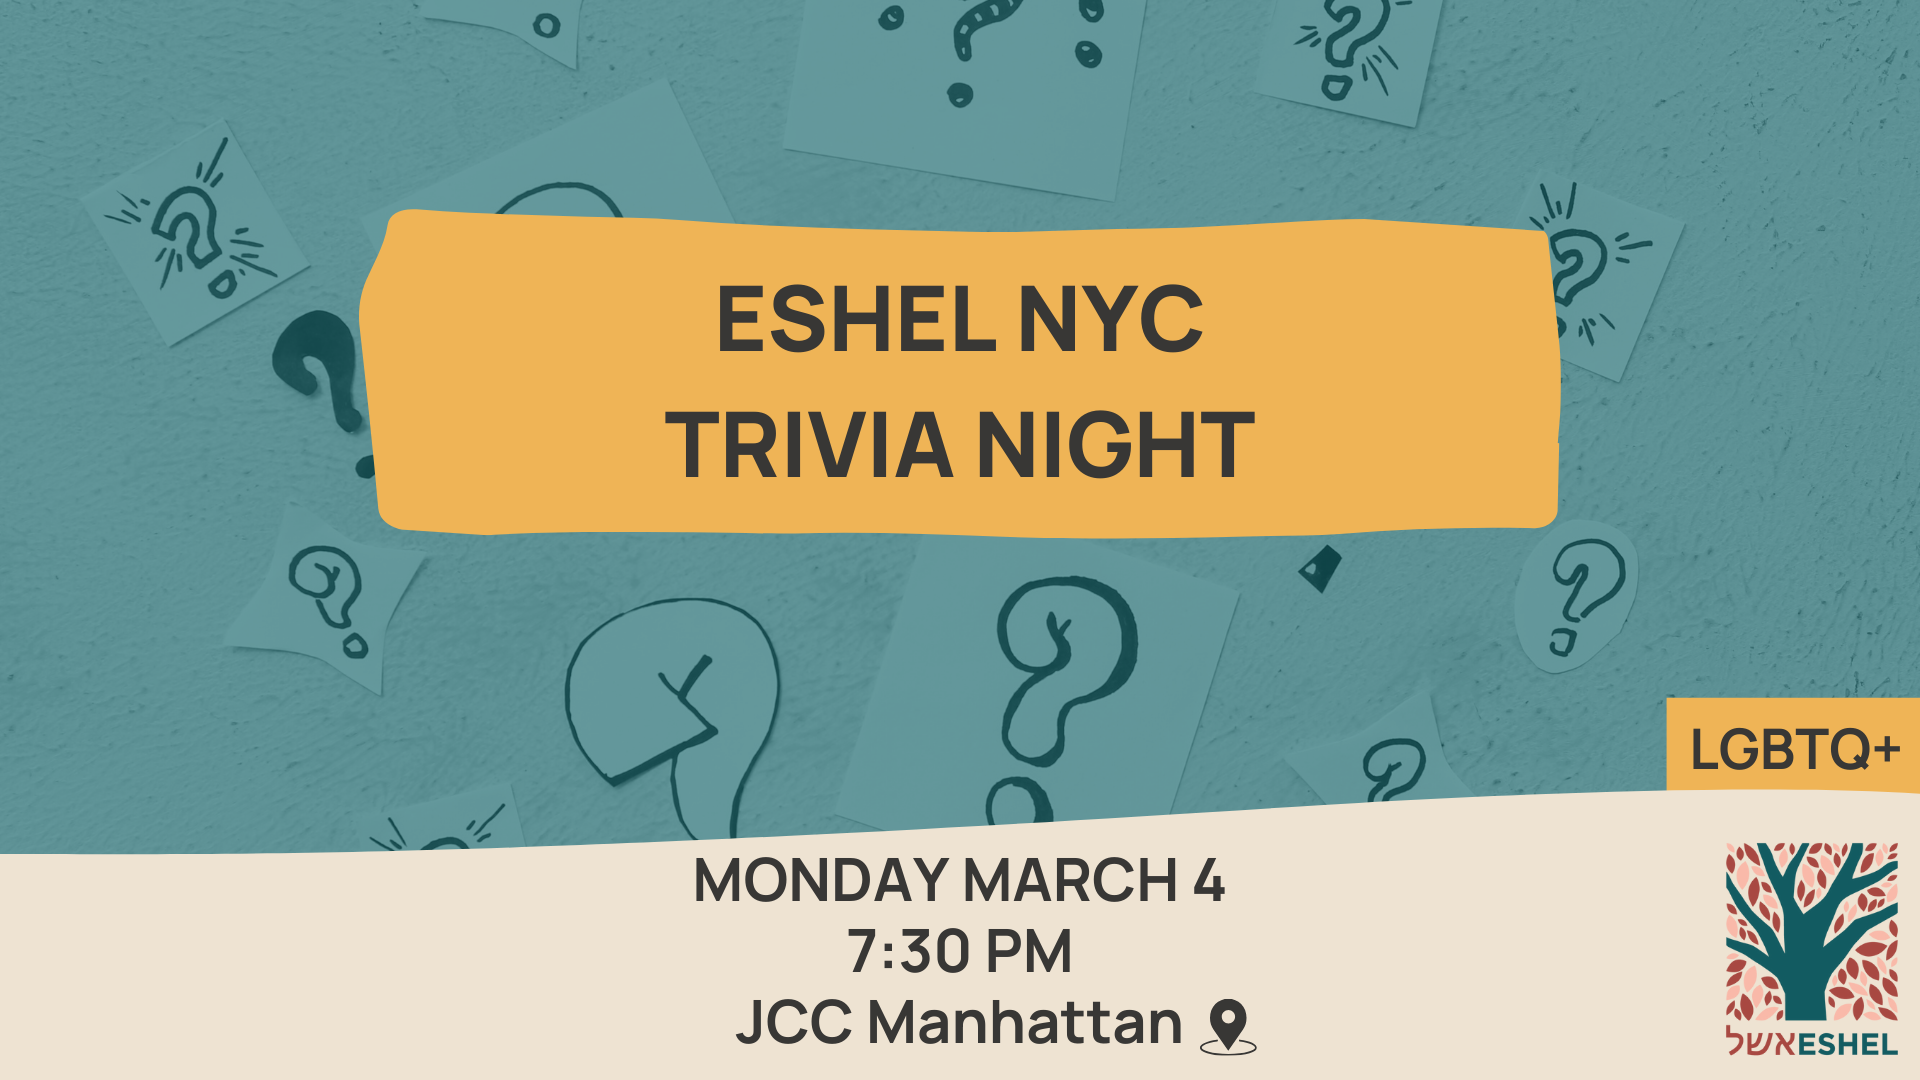 Eshel NYC Trivia night